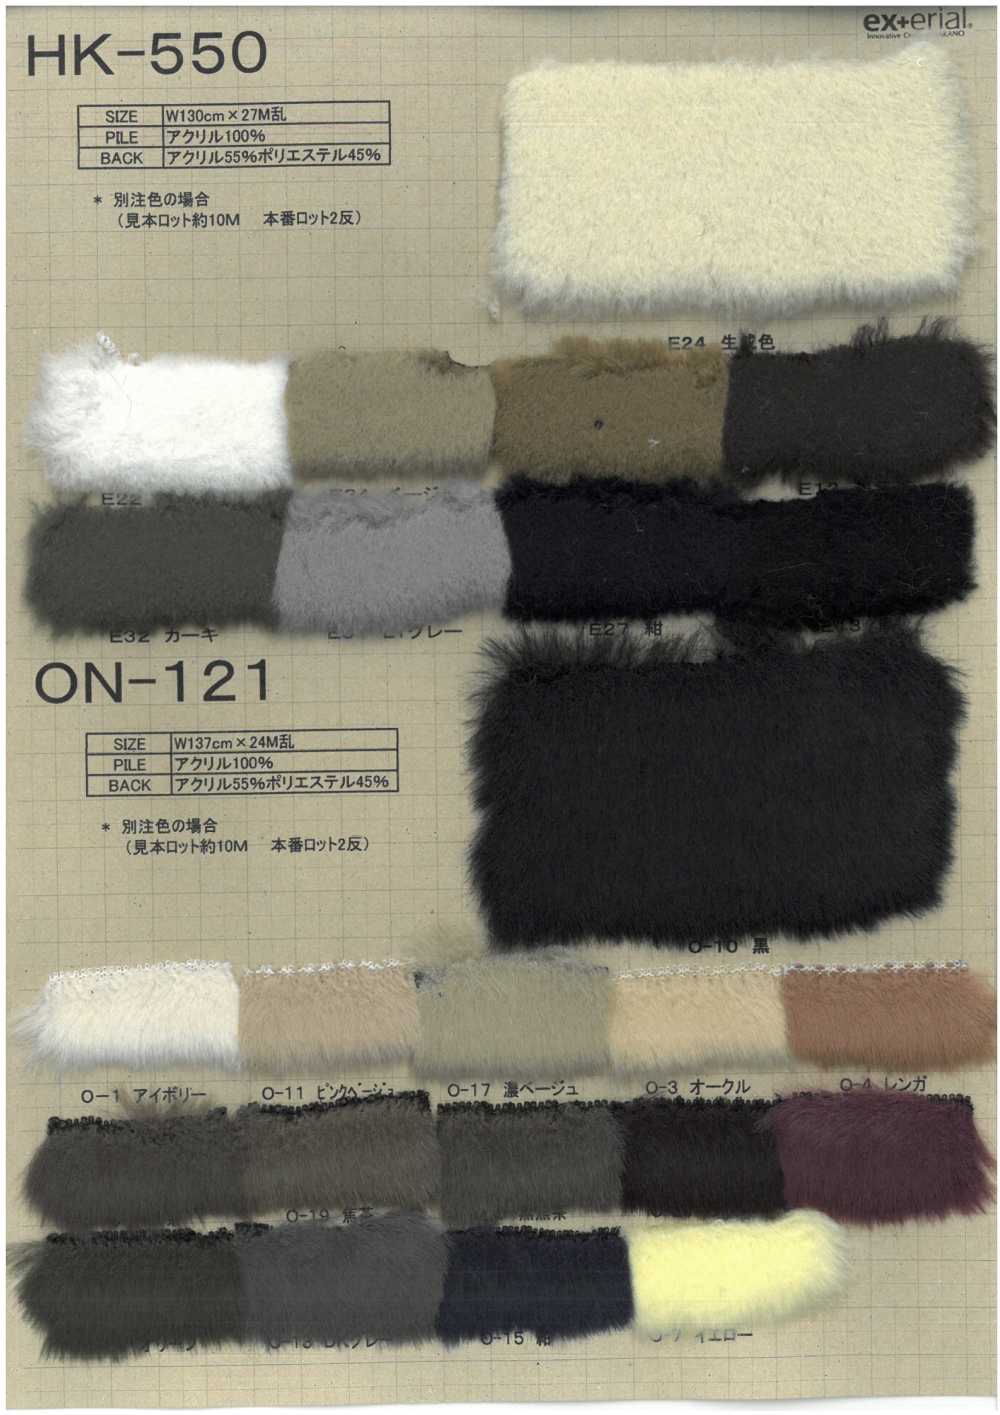 ON-121 Fourrure Artisanale [ragondin][Fabrication De Textile] Industrie Du Jersey Nakano